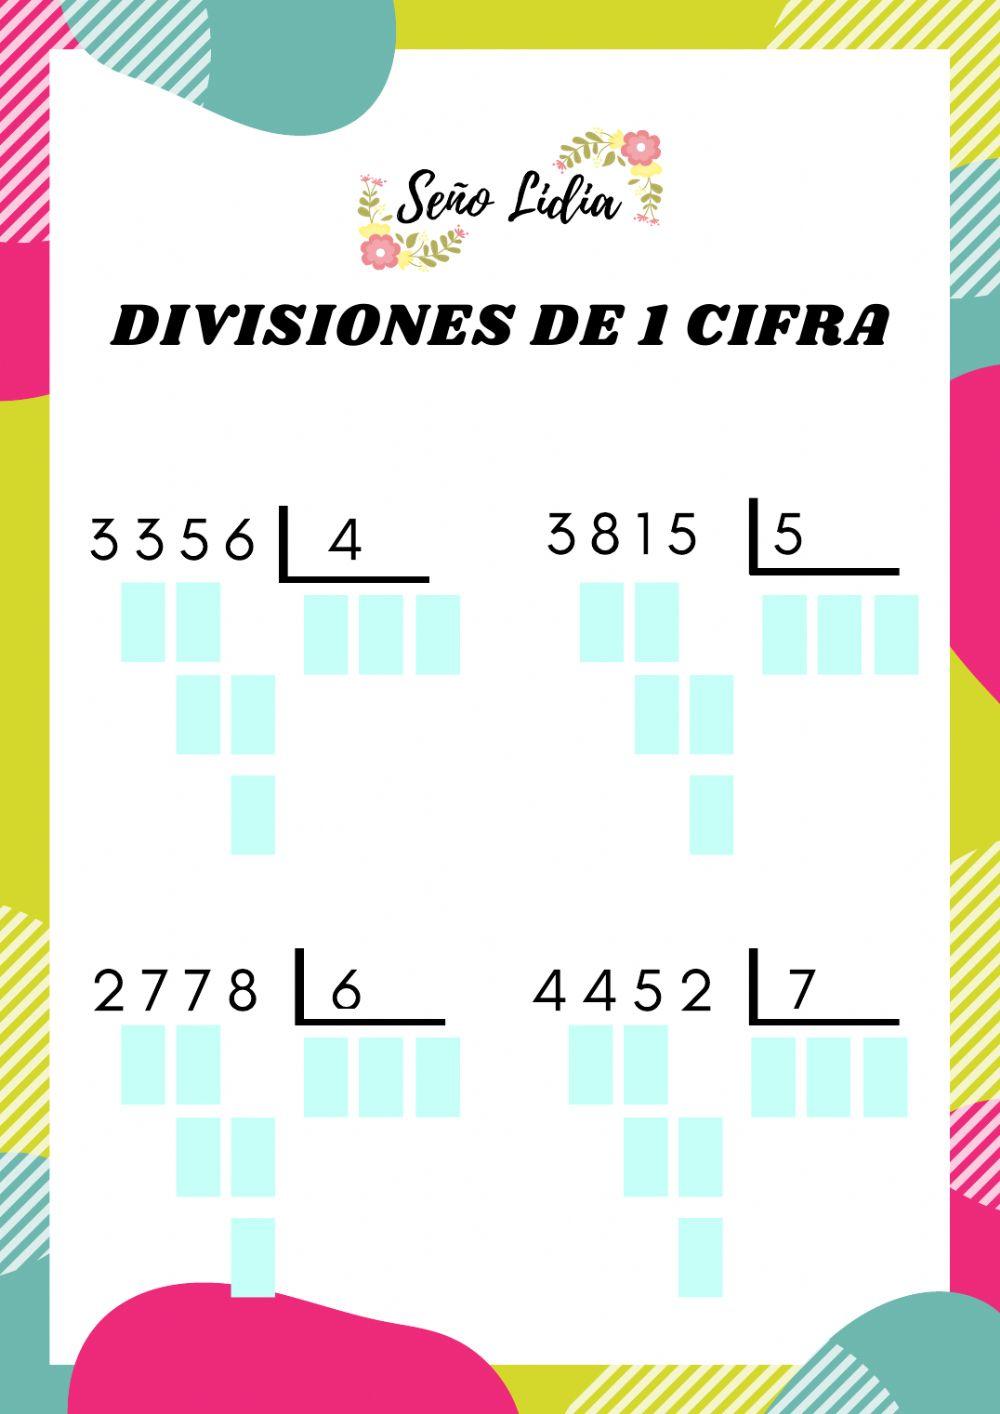 Divisiones de 1 cifra